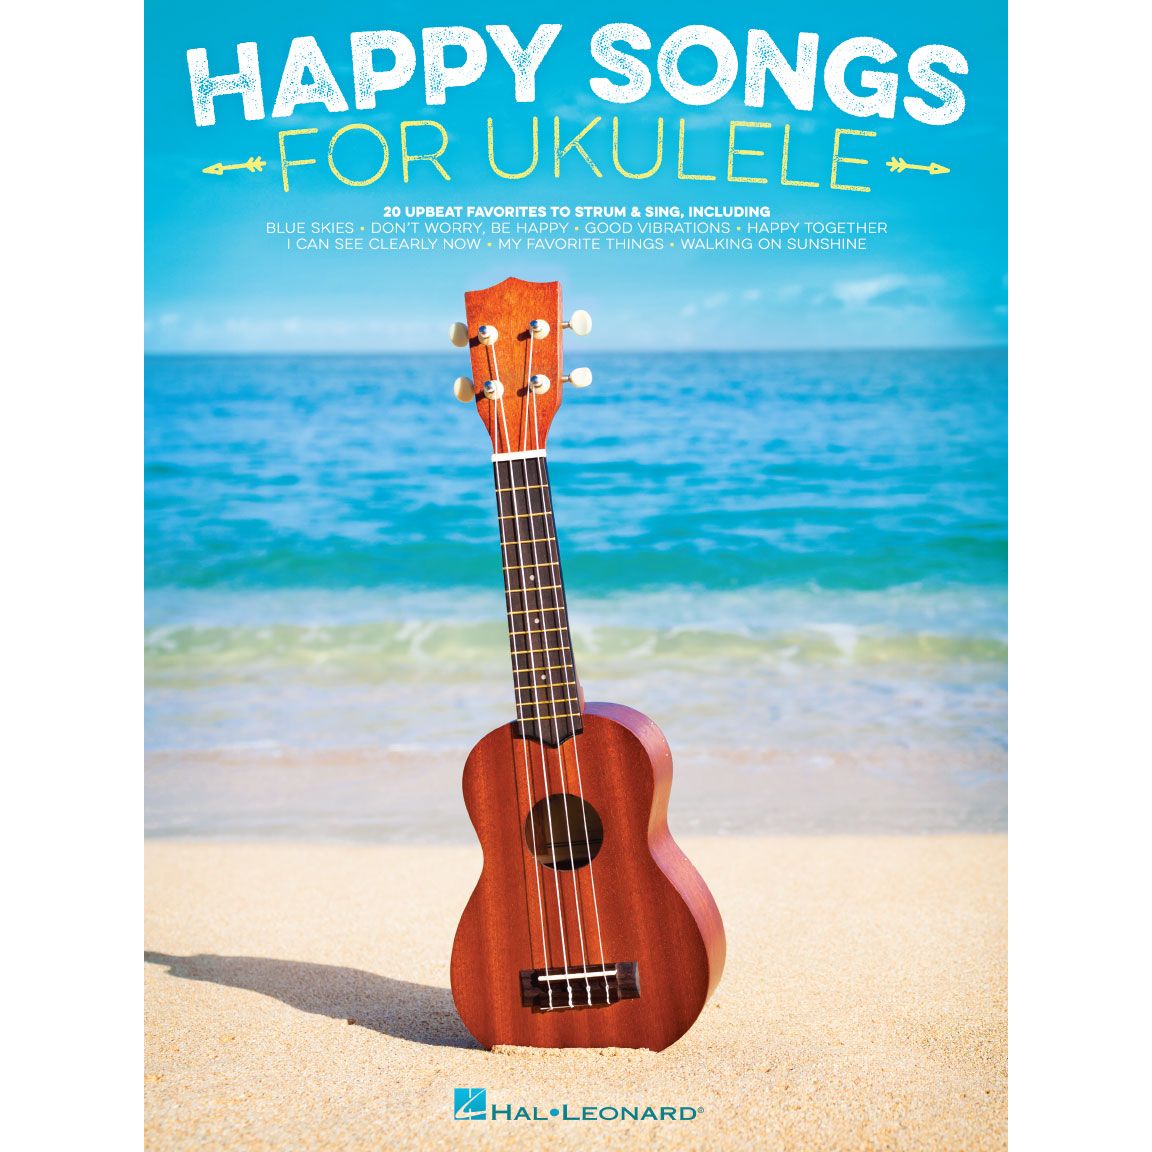 Happy Songs for Ukulele - 20 Upbeat Favorites to Strum & Sing